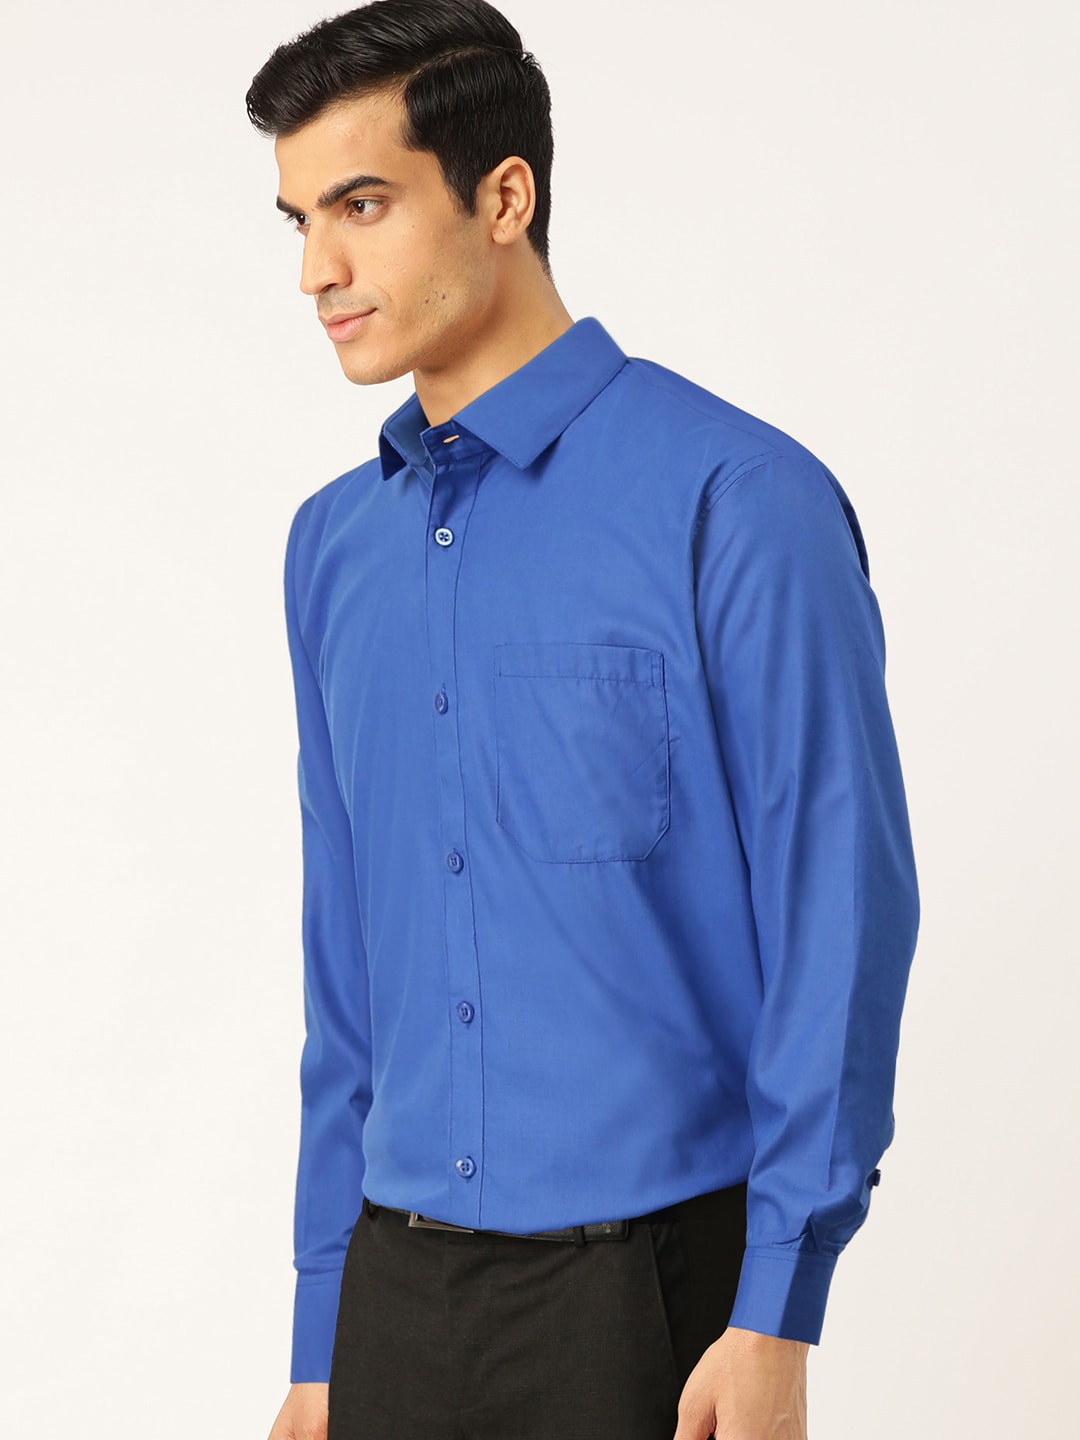 Men's Cotton Solid Royal Blue Formal Shirt's ( SF 361Royal ) - Jainish